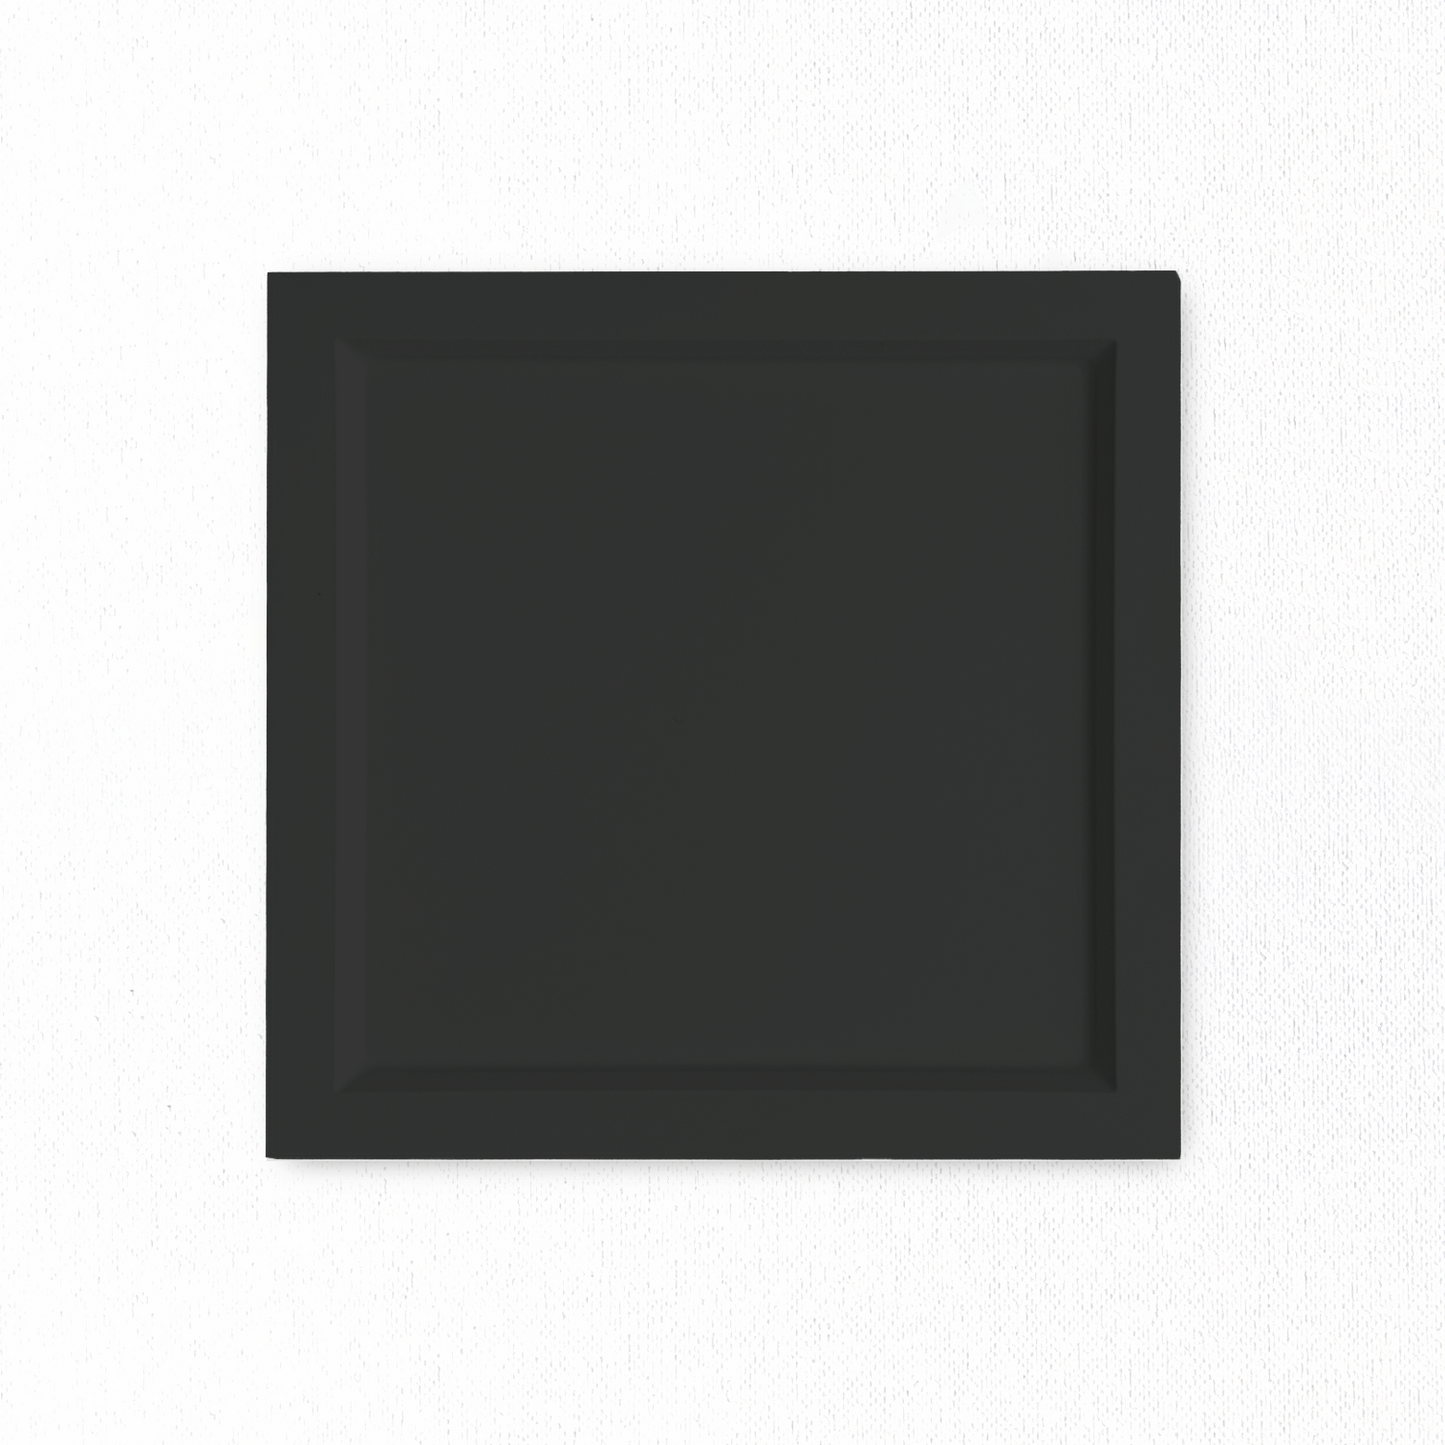 6.5" x 6.5" Black Outline Sample